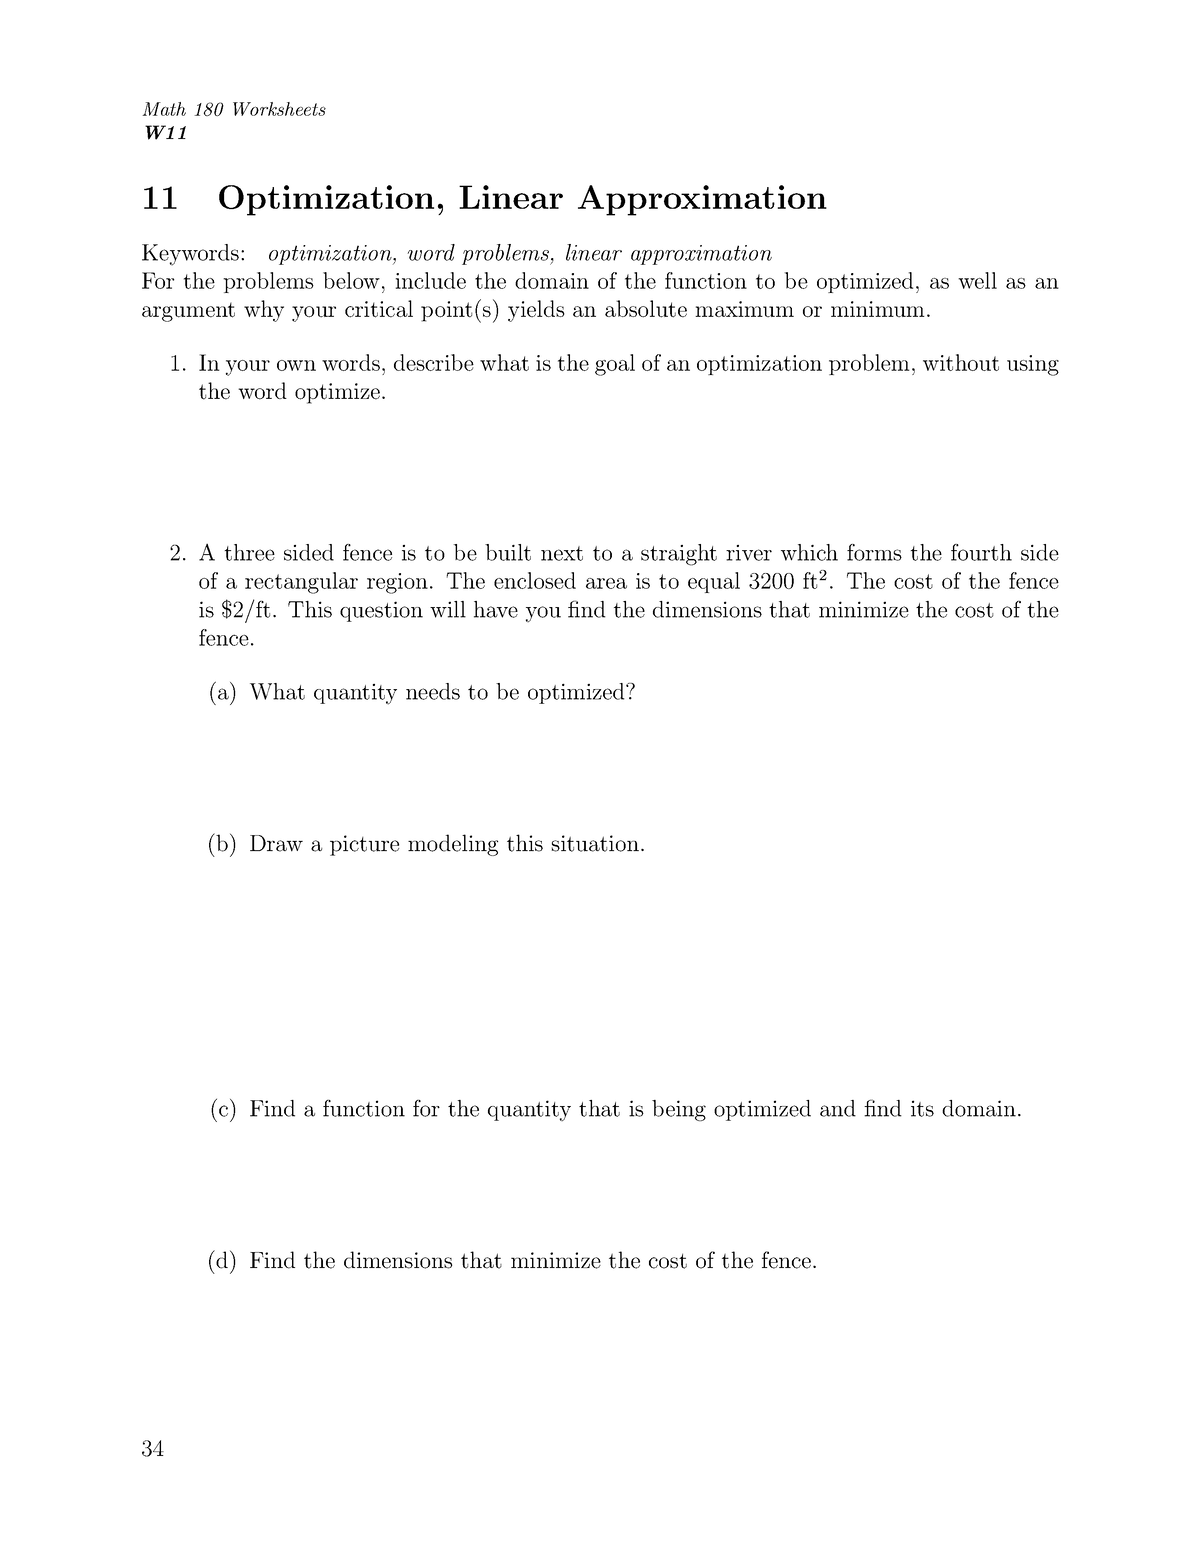 math-180-worksheets-week-11-math-180-worksheets-w-11-optimization-linear-approximation